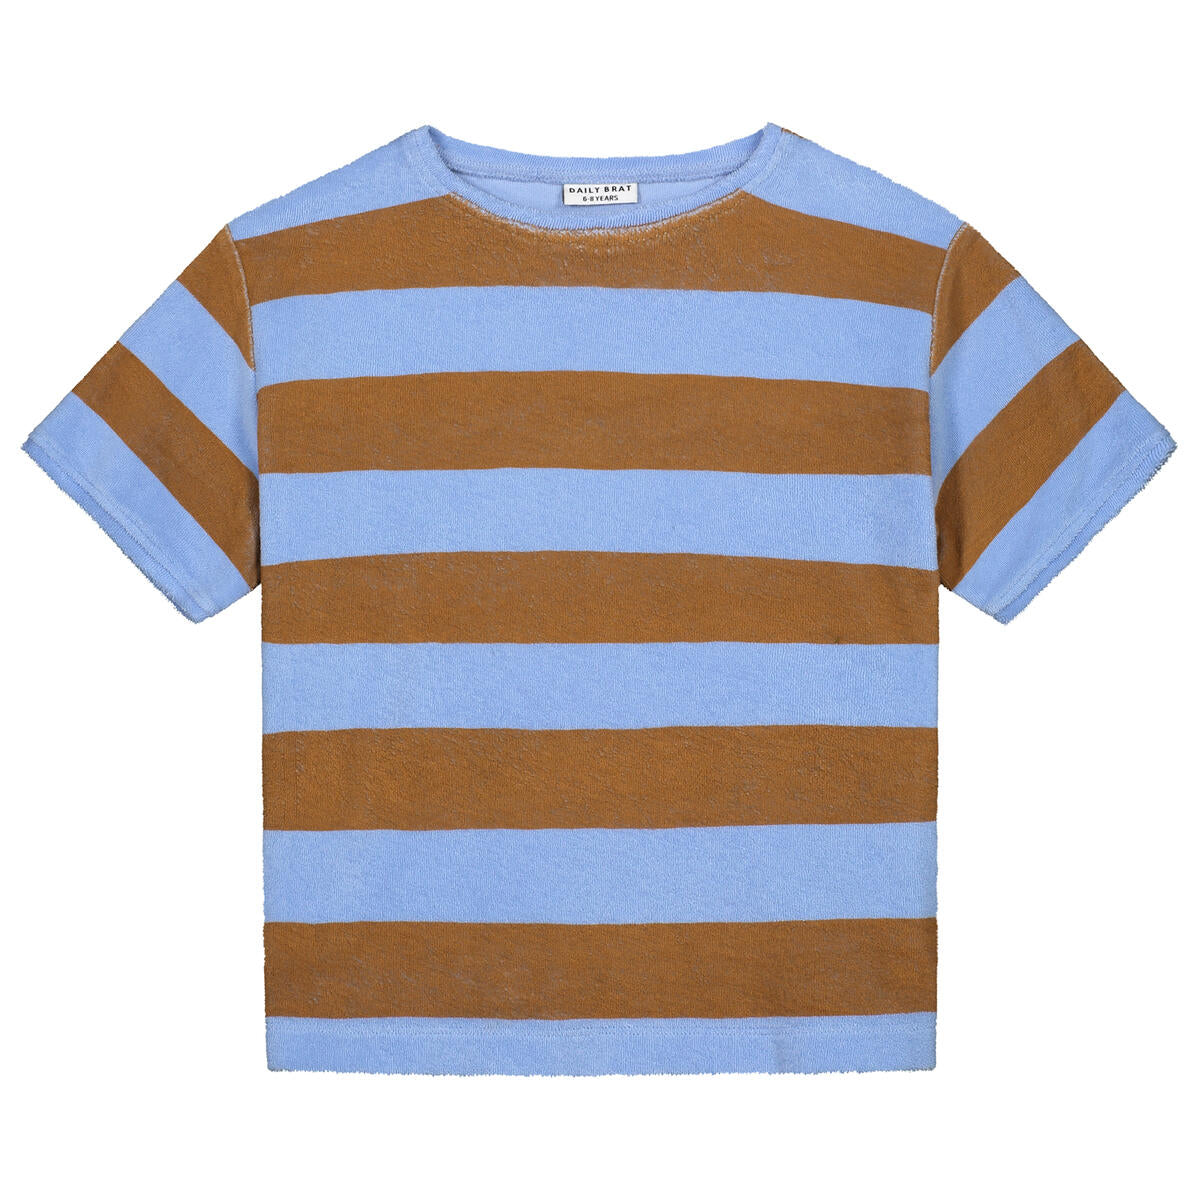 Striped towel t-shirt serenity blue, Daily Brat